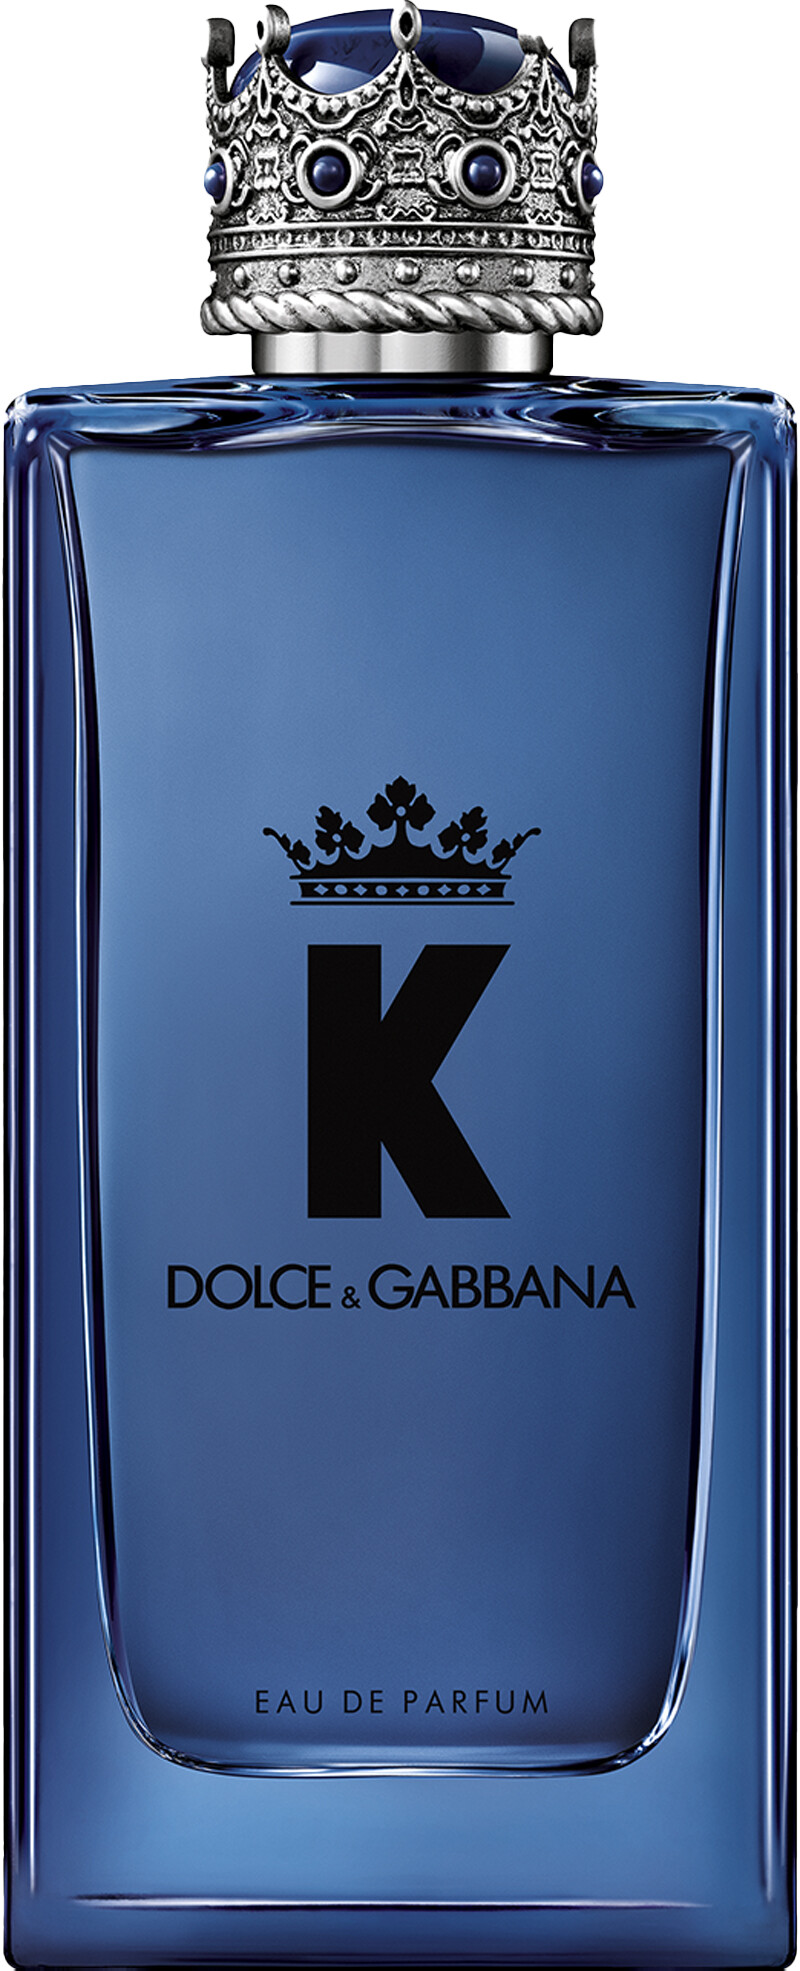 Dolce & Gabbana K By Dolce&Gabbana Eau de Parfum Spray 150ml